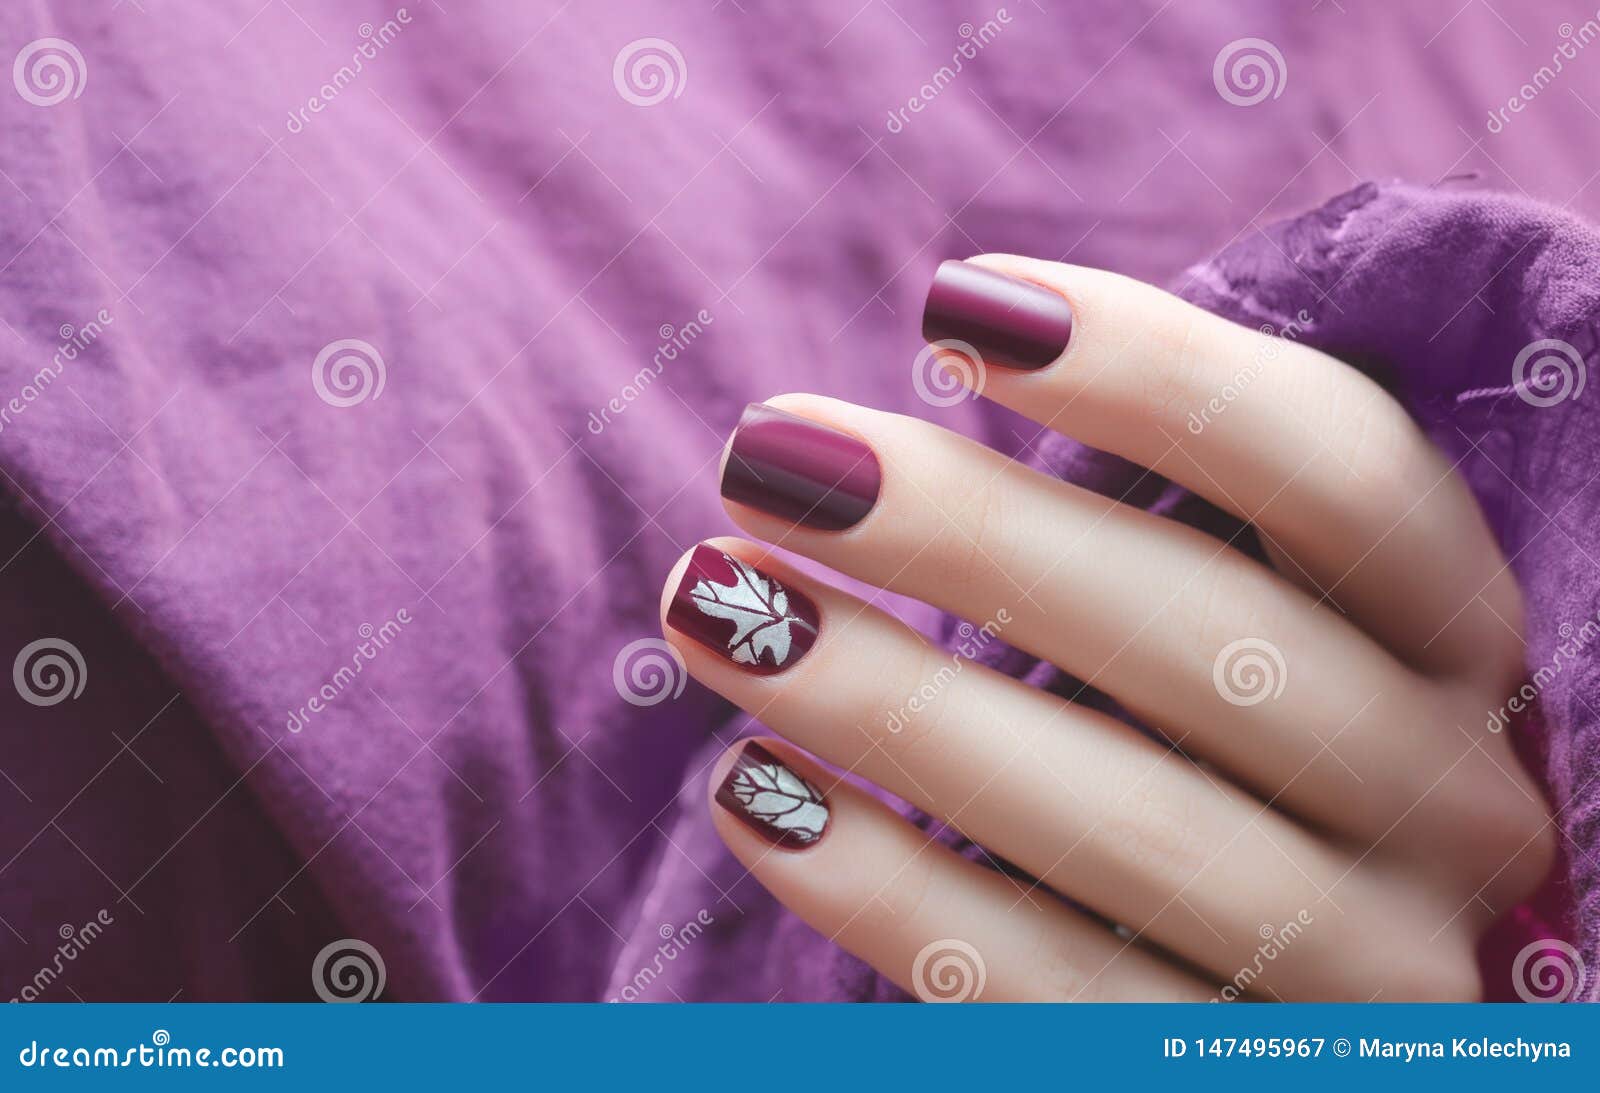 7. Black and Purple Nail Design on Dark Skin - wide 1